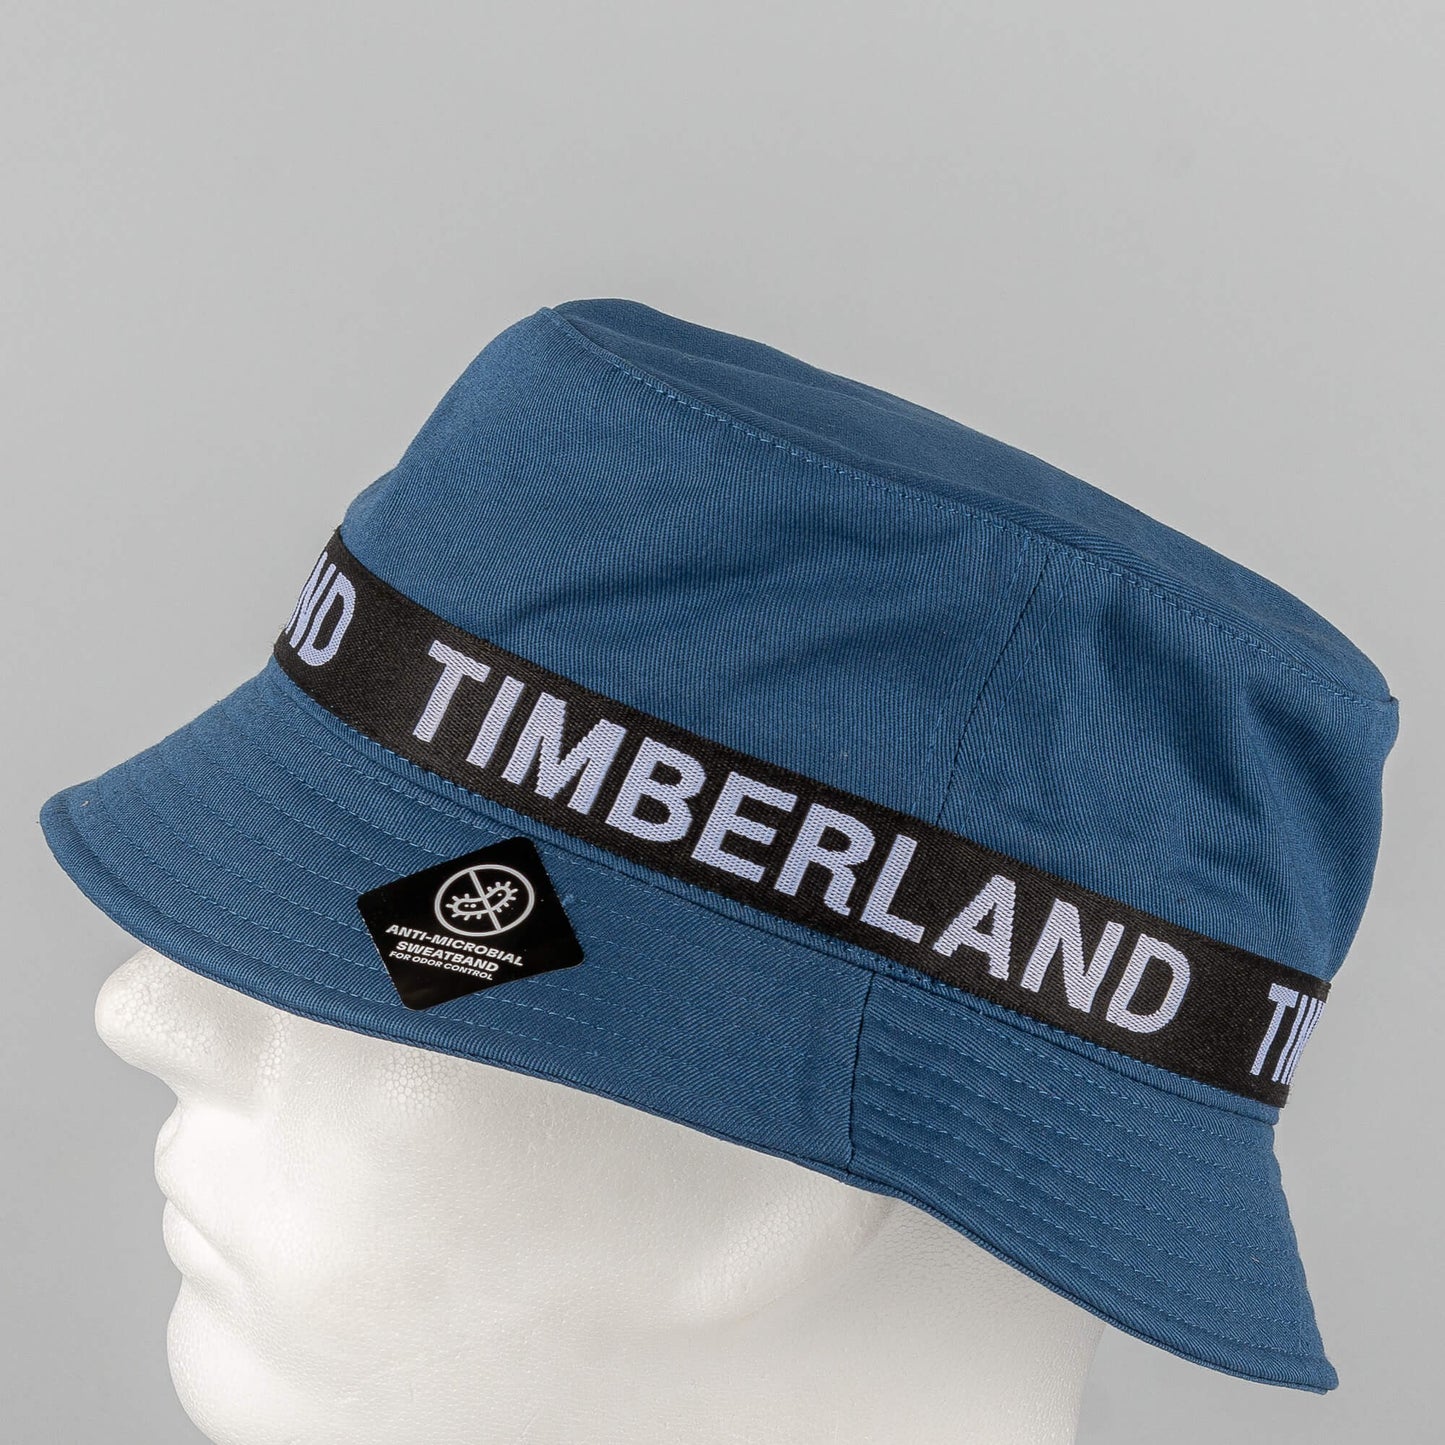 Timberland Bold Logo Bucket Hat Dark Denim